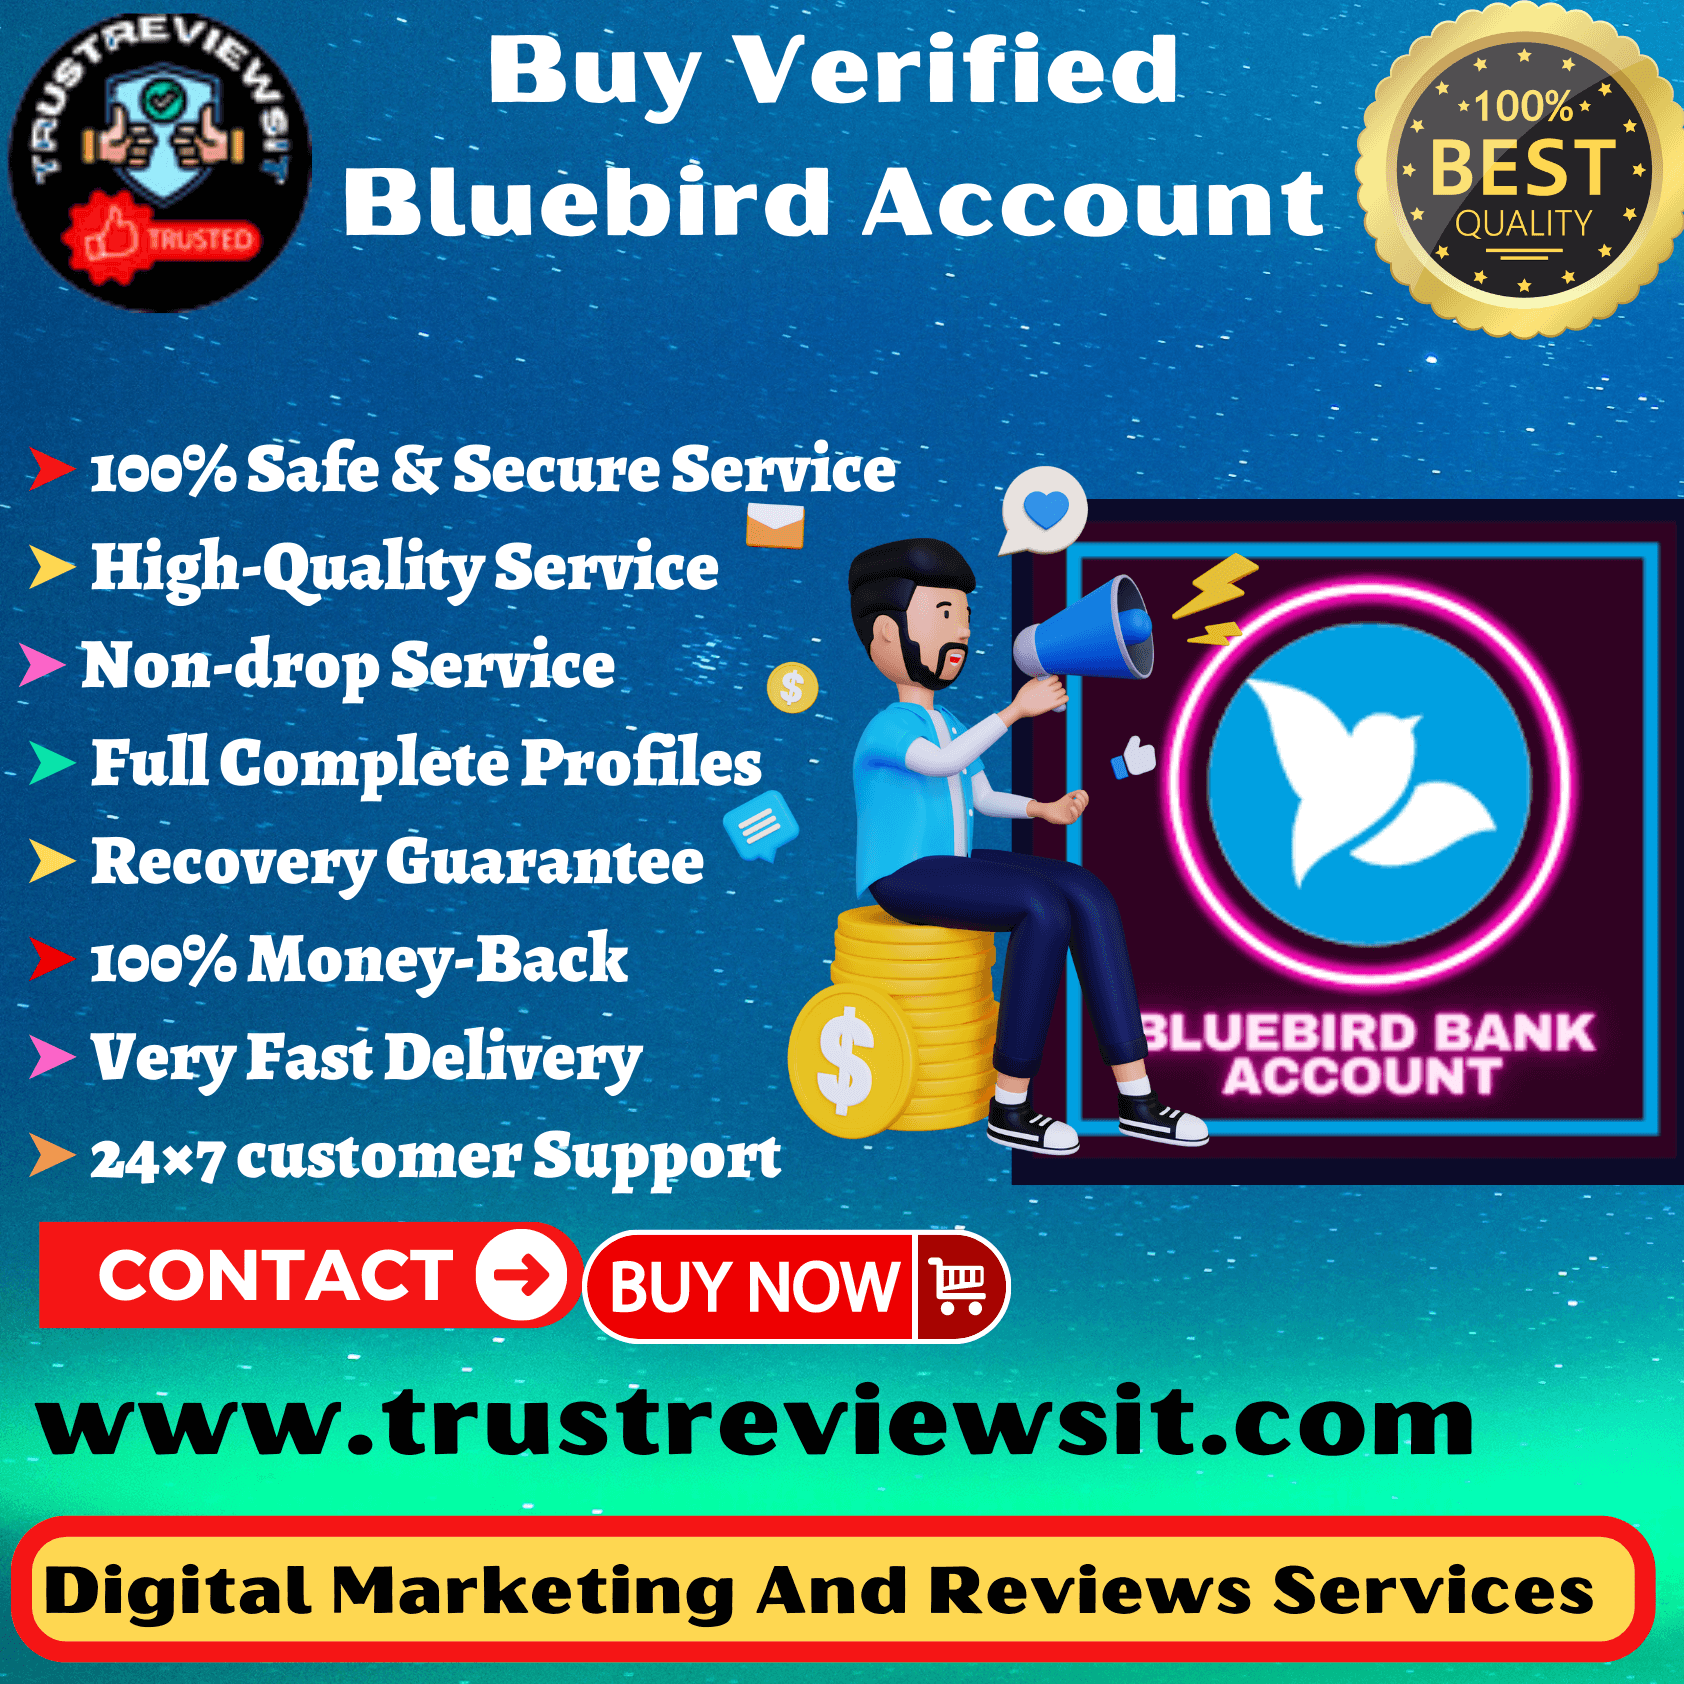 Buy Verified Bluebird Account - Trust Reviews IT